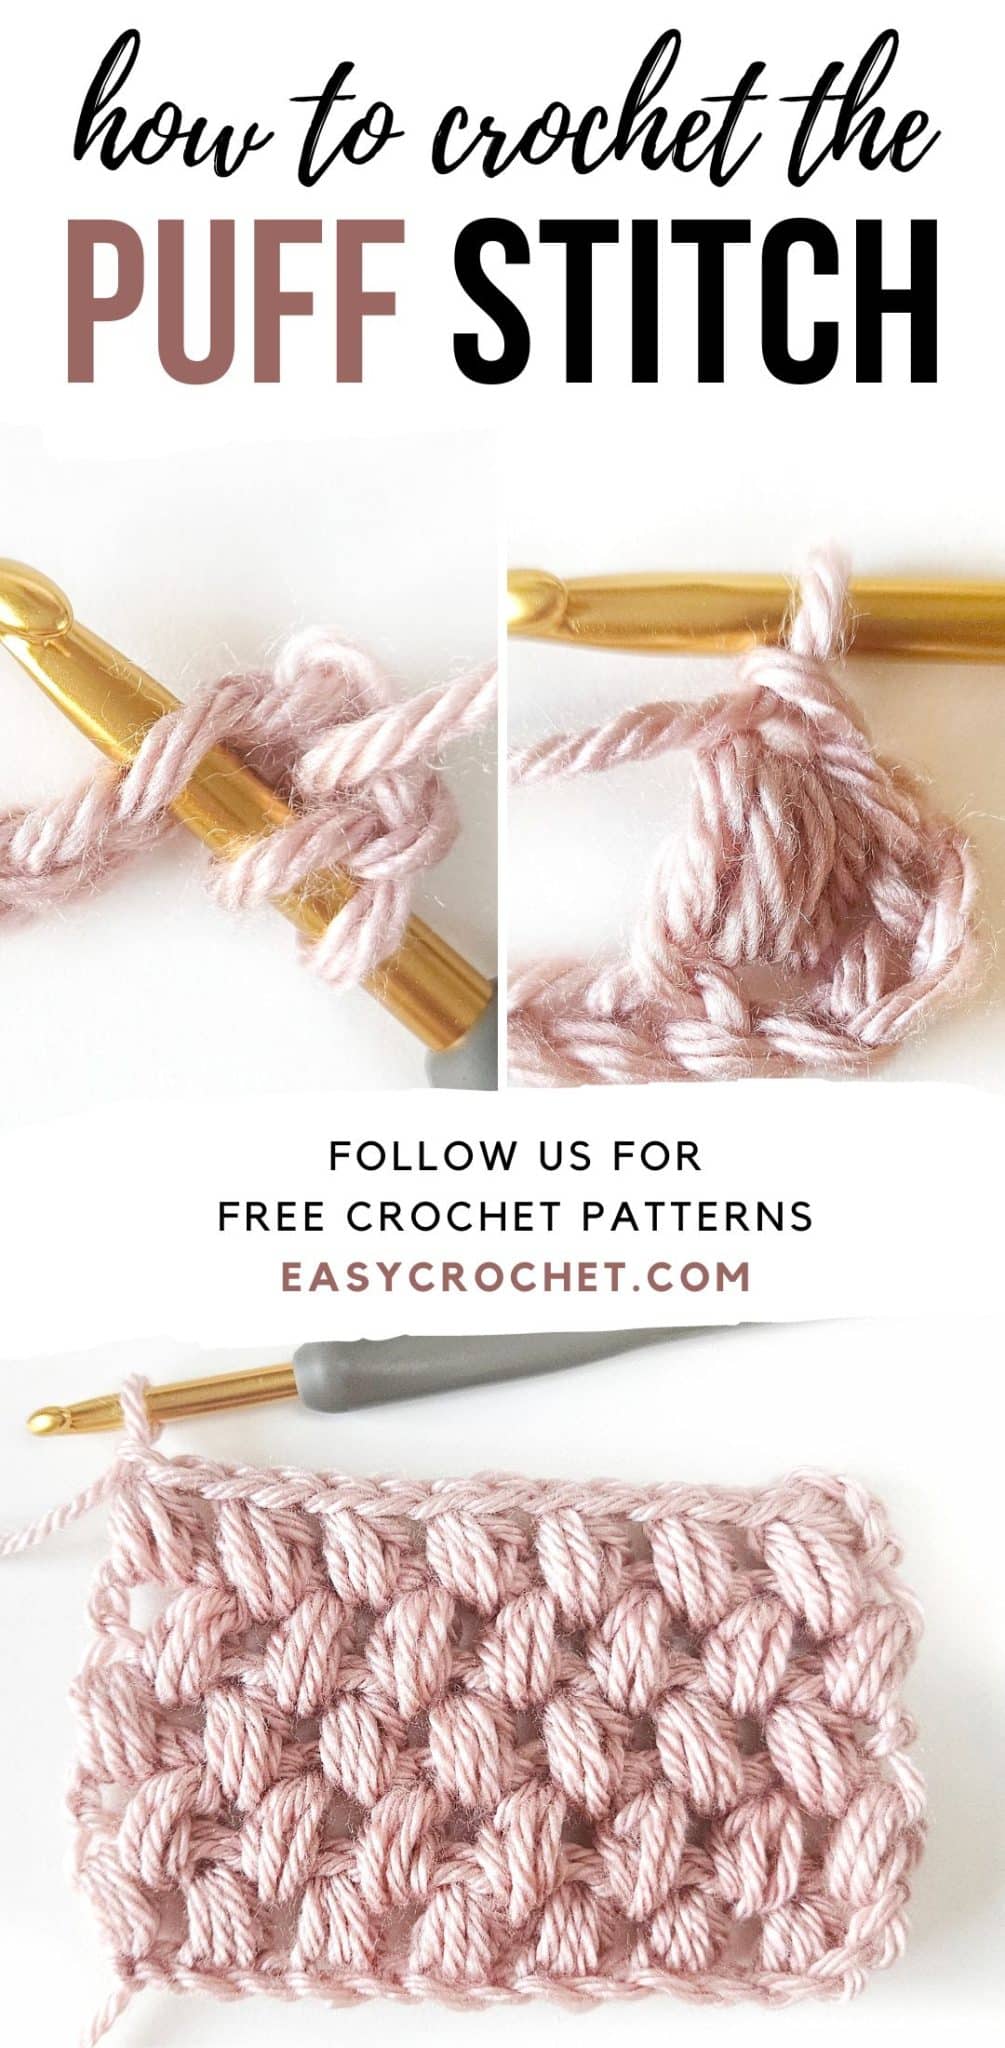 puff stitch crochet tutorial with photos